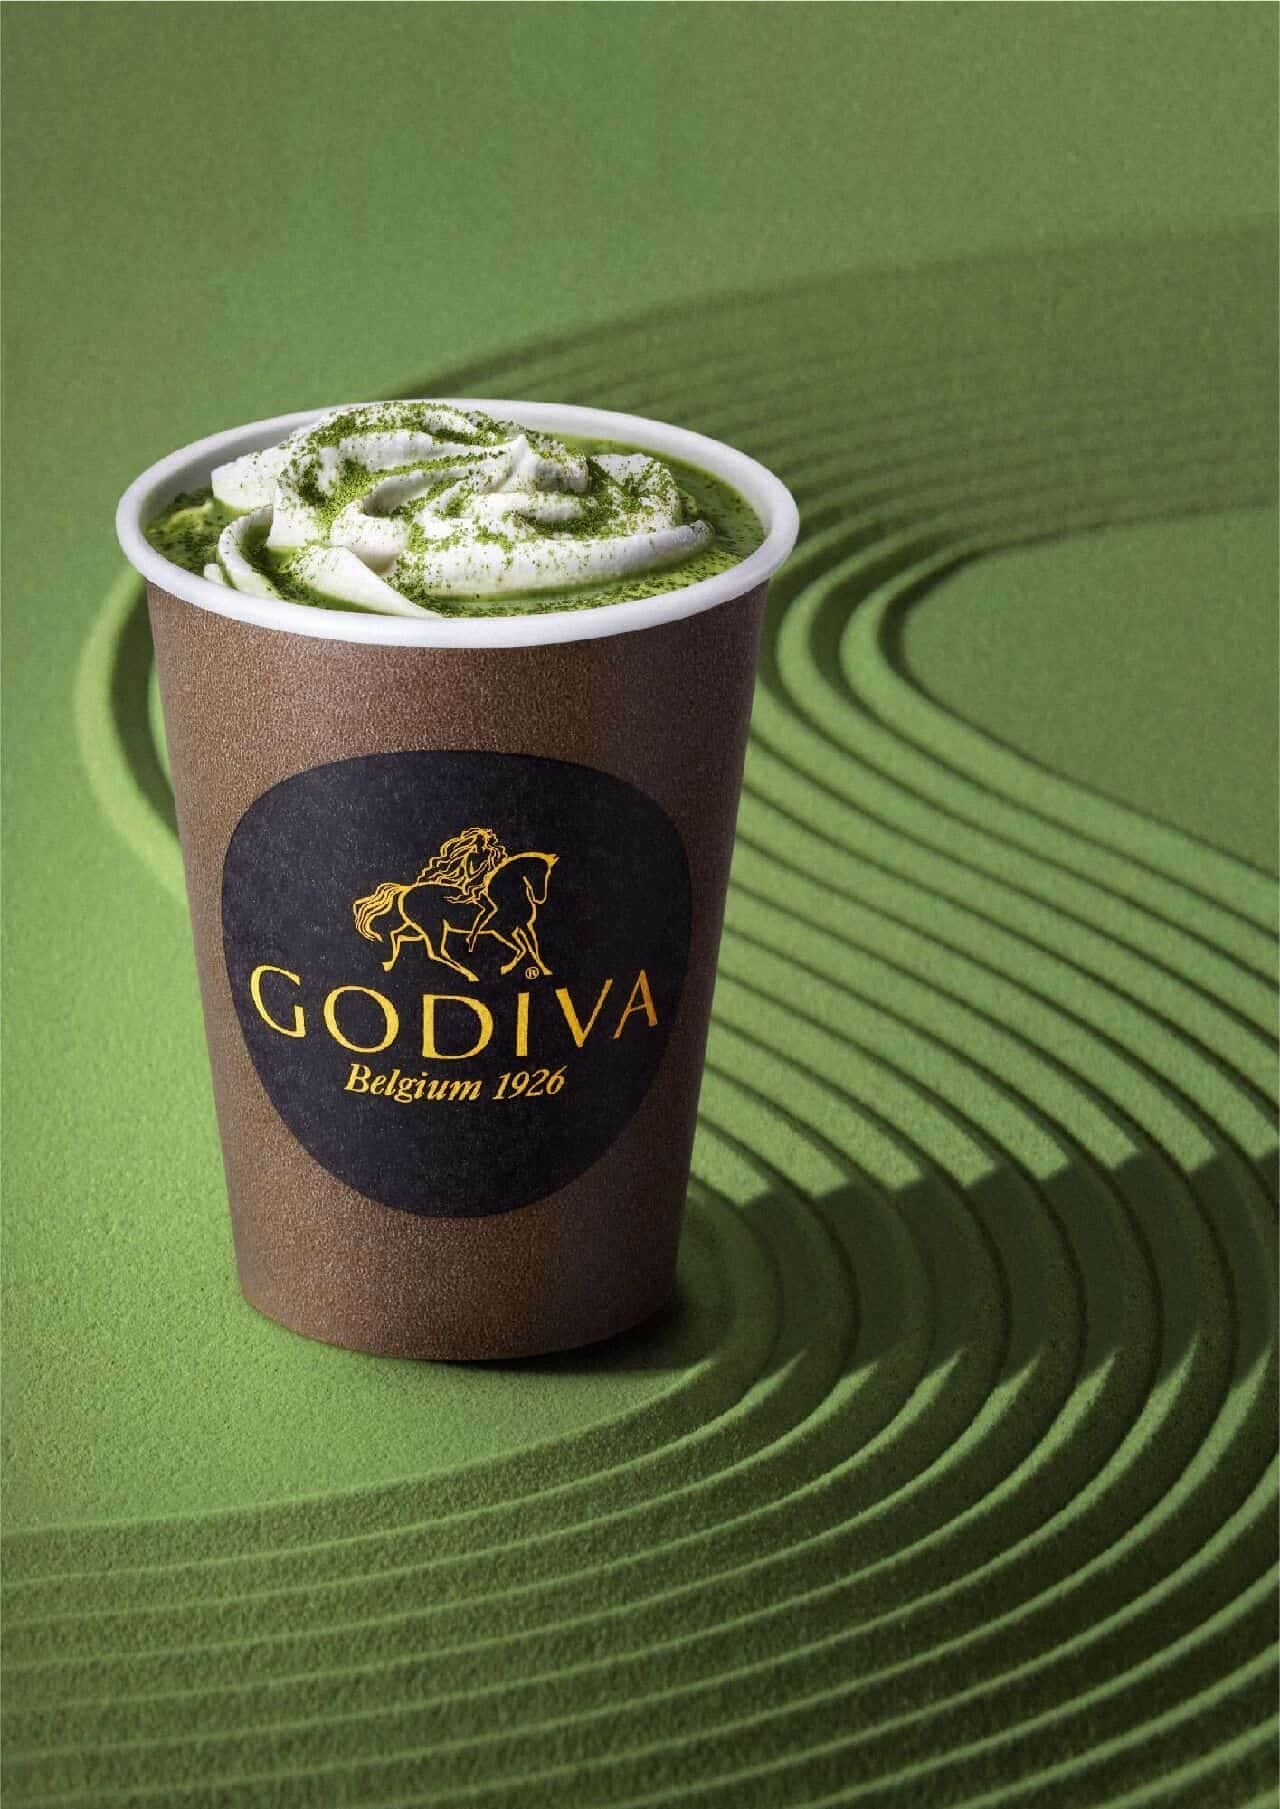 Godiva "Hot Chocolixa Green Tea